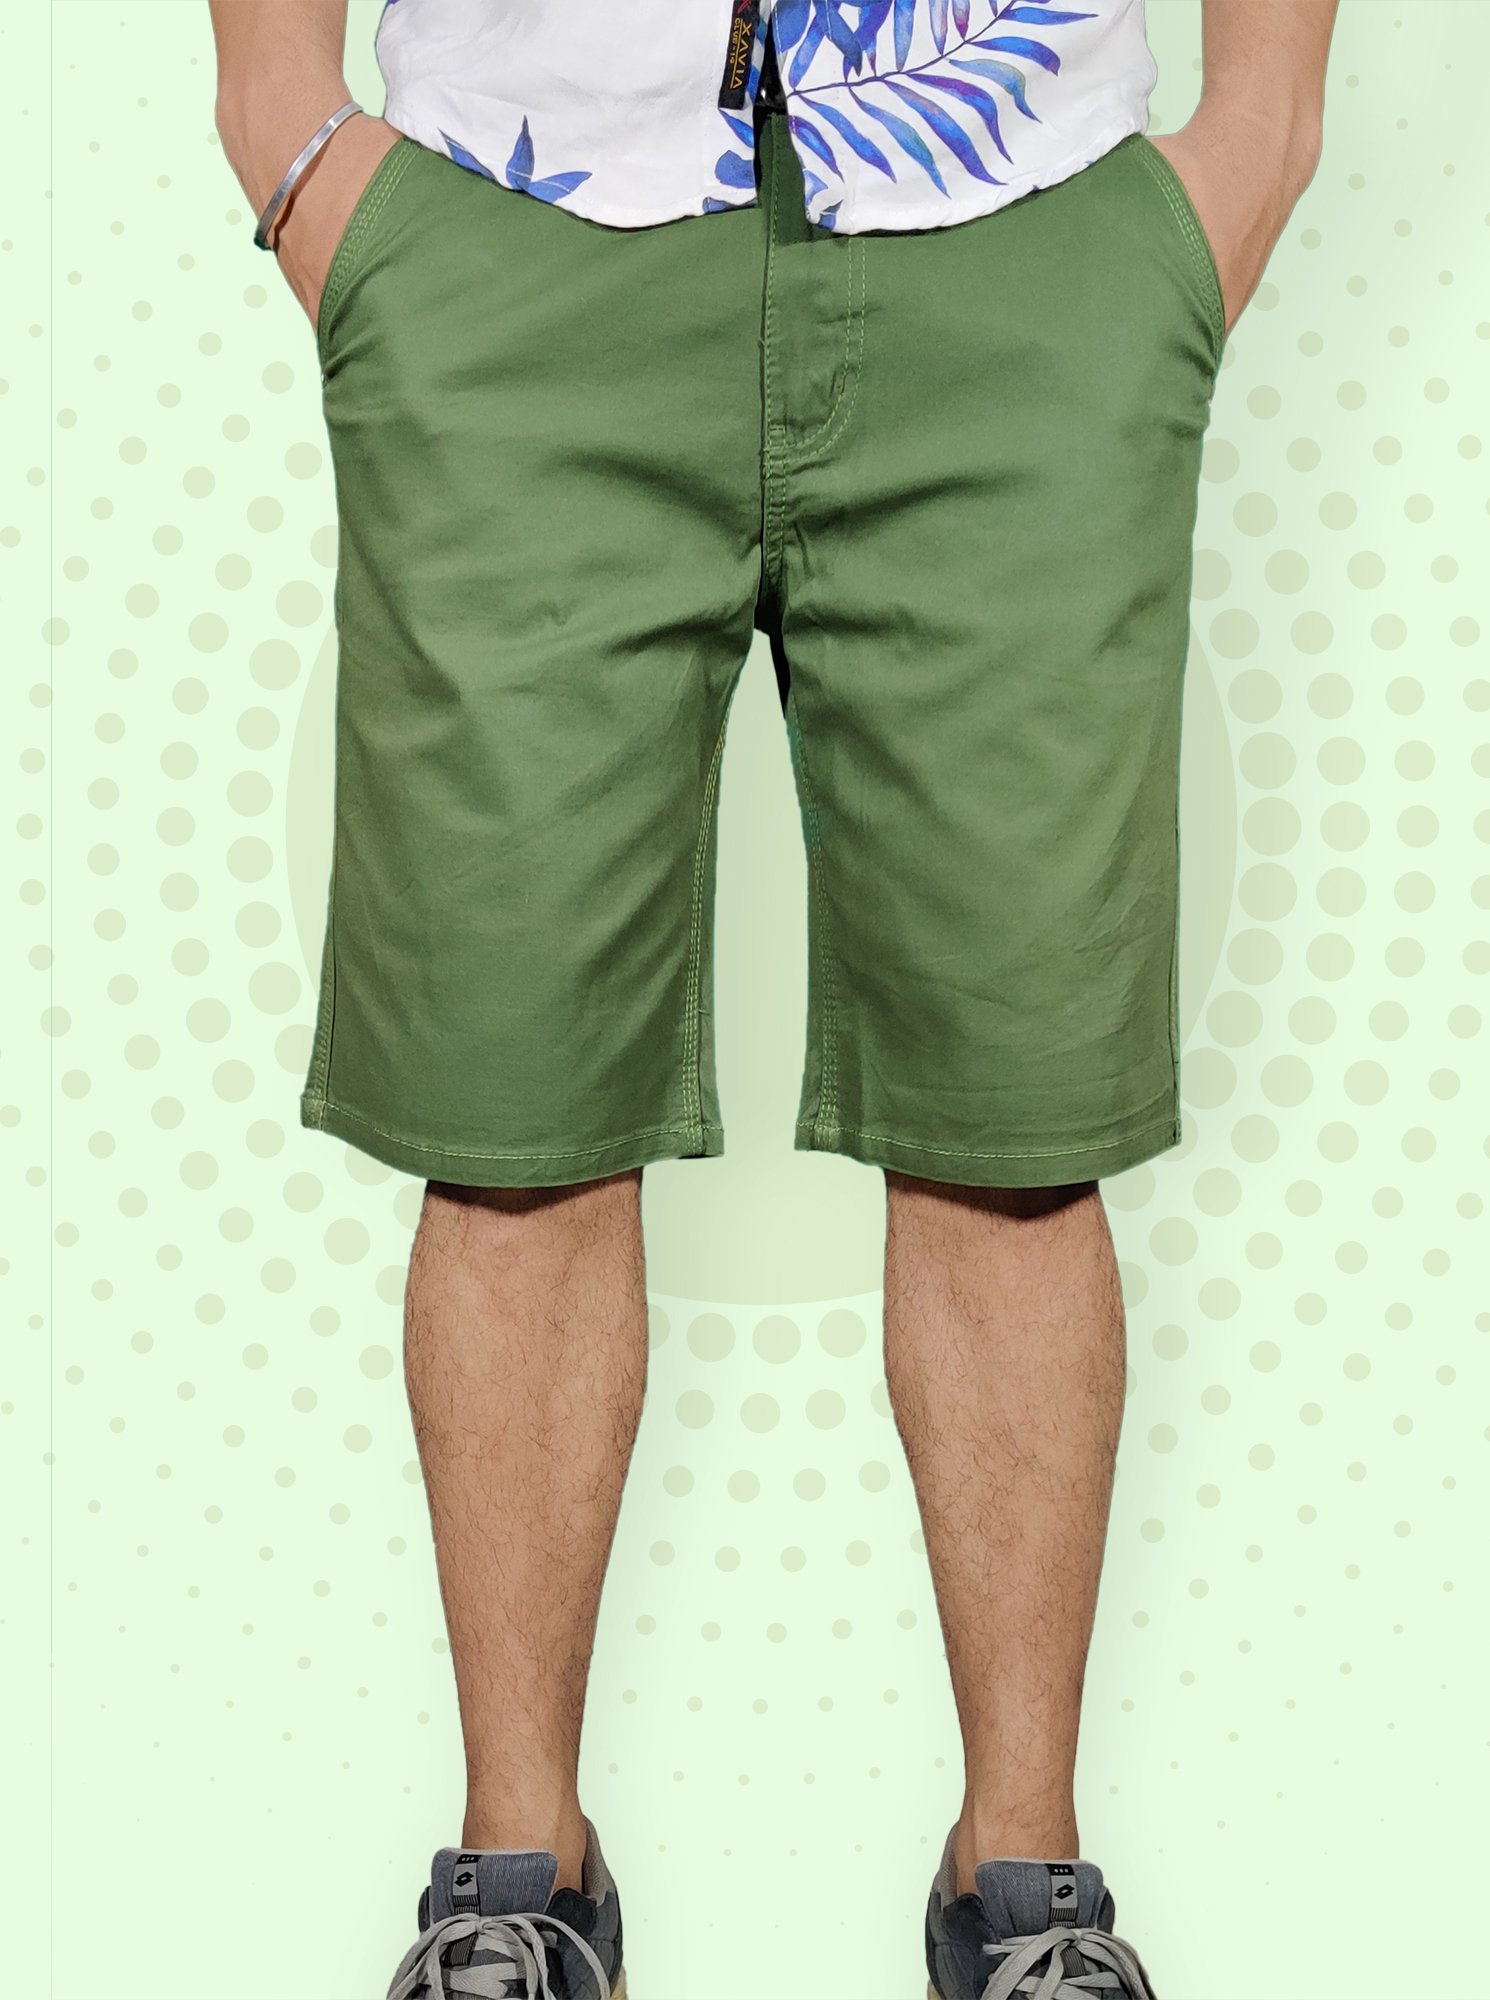 olive shorts mens